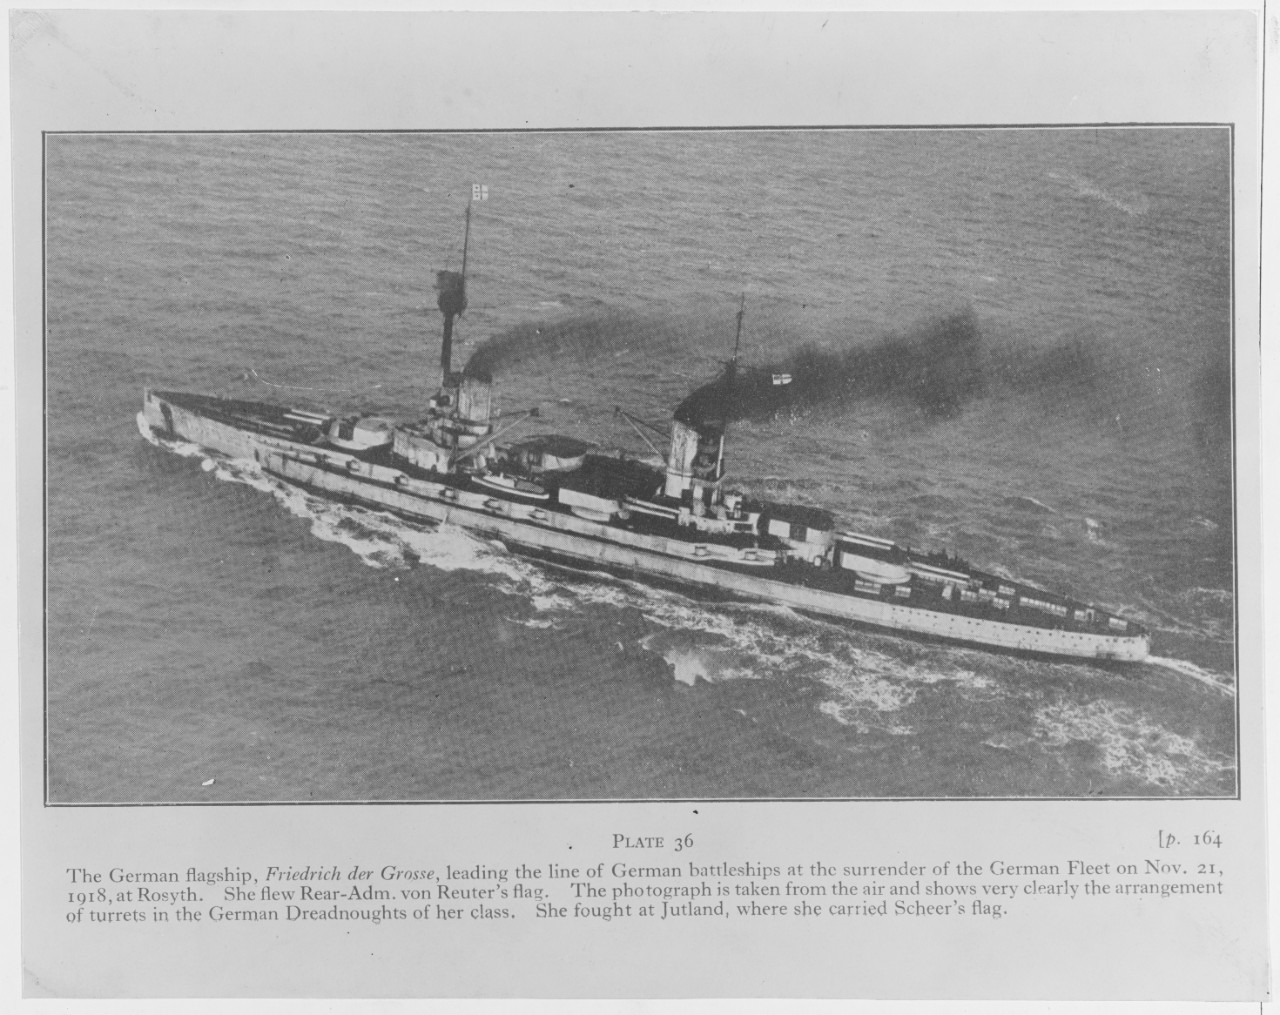 The German flagship FRIEDRICH DER GROSSE, leading the line of German battleships at surrender of the German Fleet, November 21, 1918